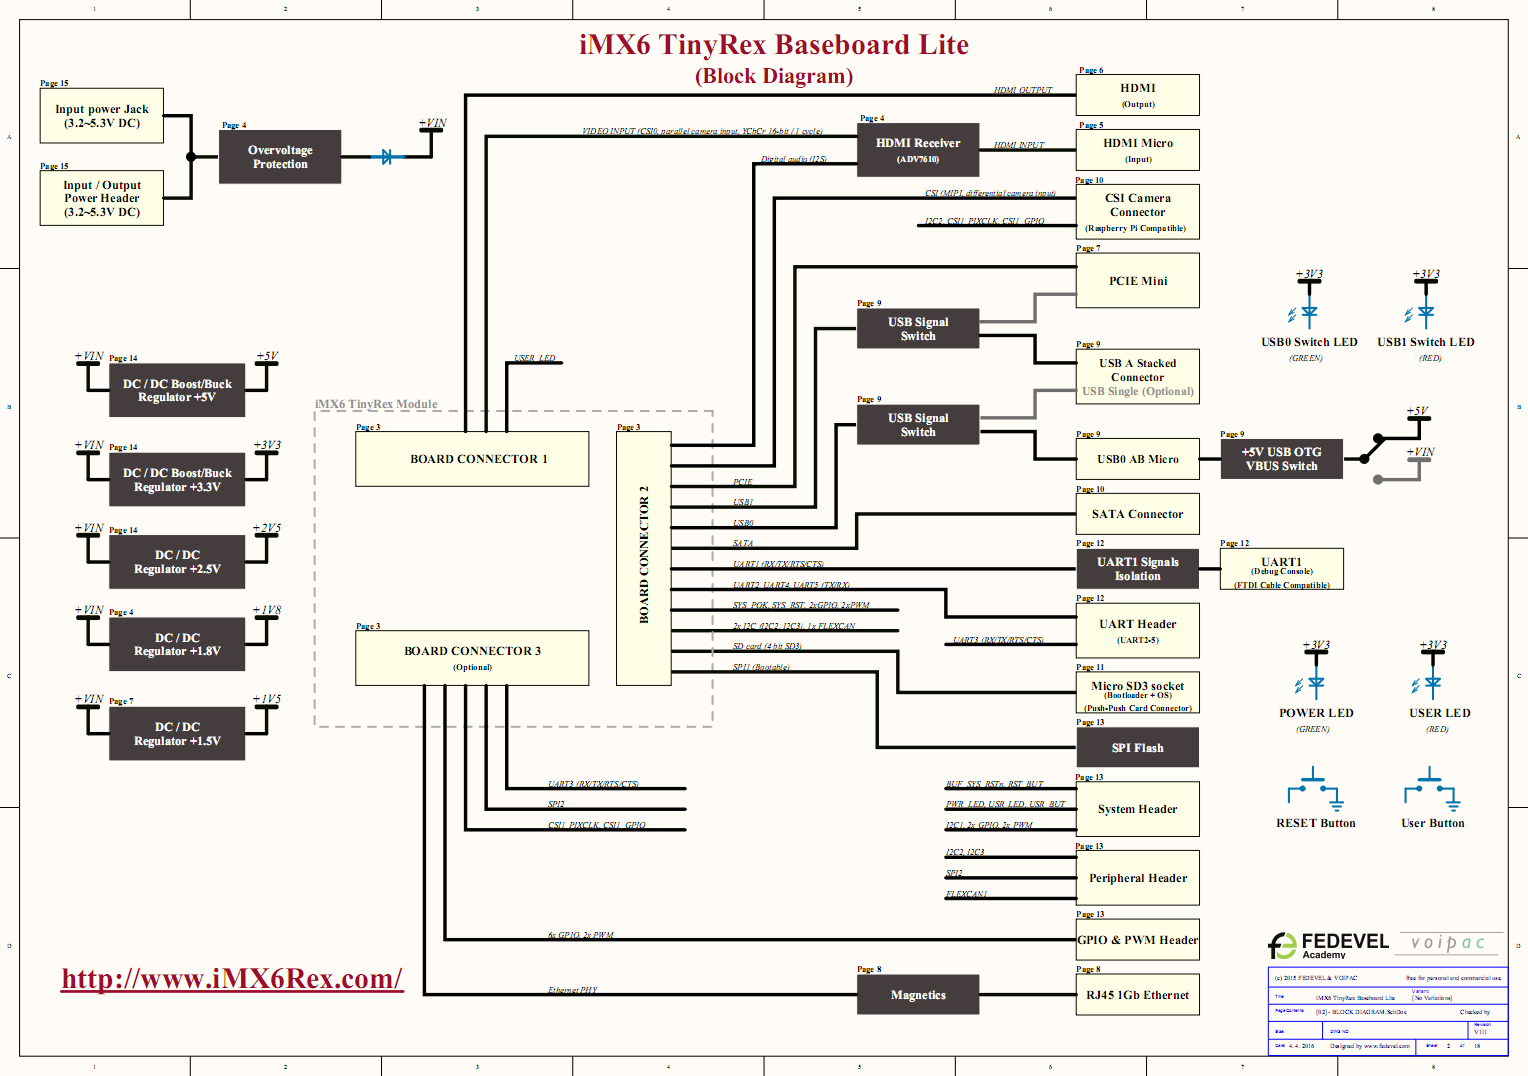 iMX6 TinyRex Baseboard Lite V1I1 - Block Diagram